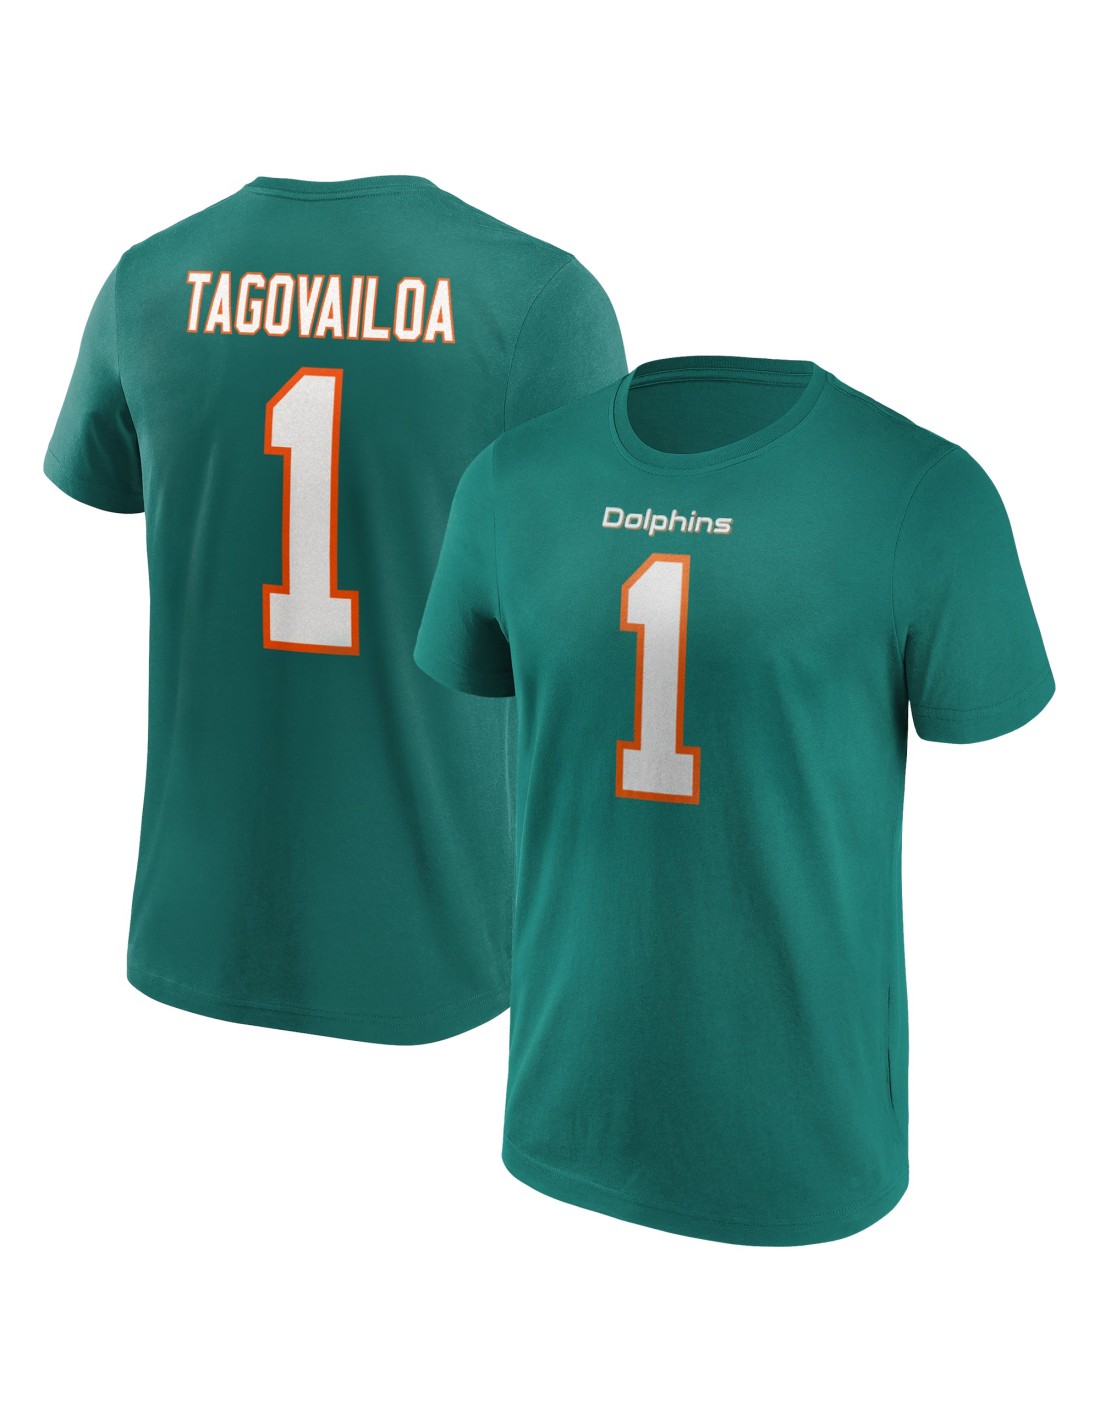 Miami Dolphins Graphic T-Shirt Tagovailoa 1